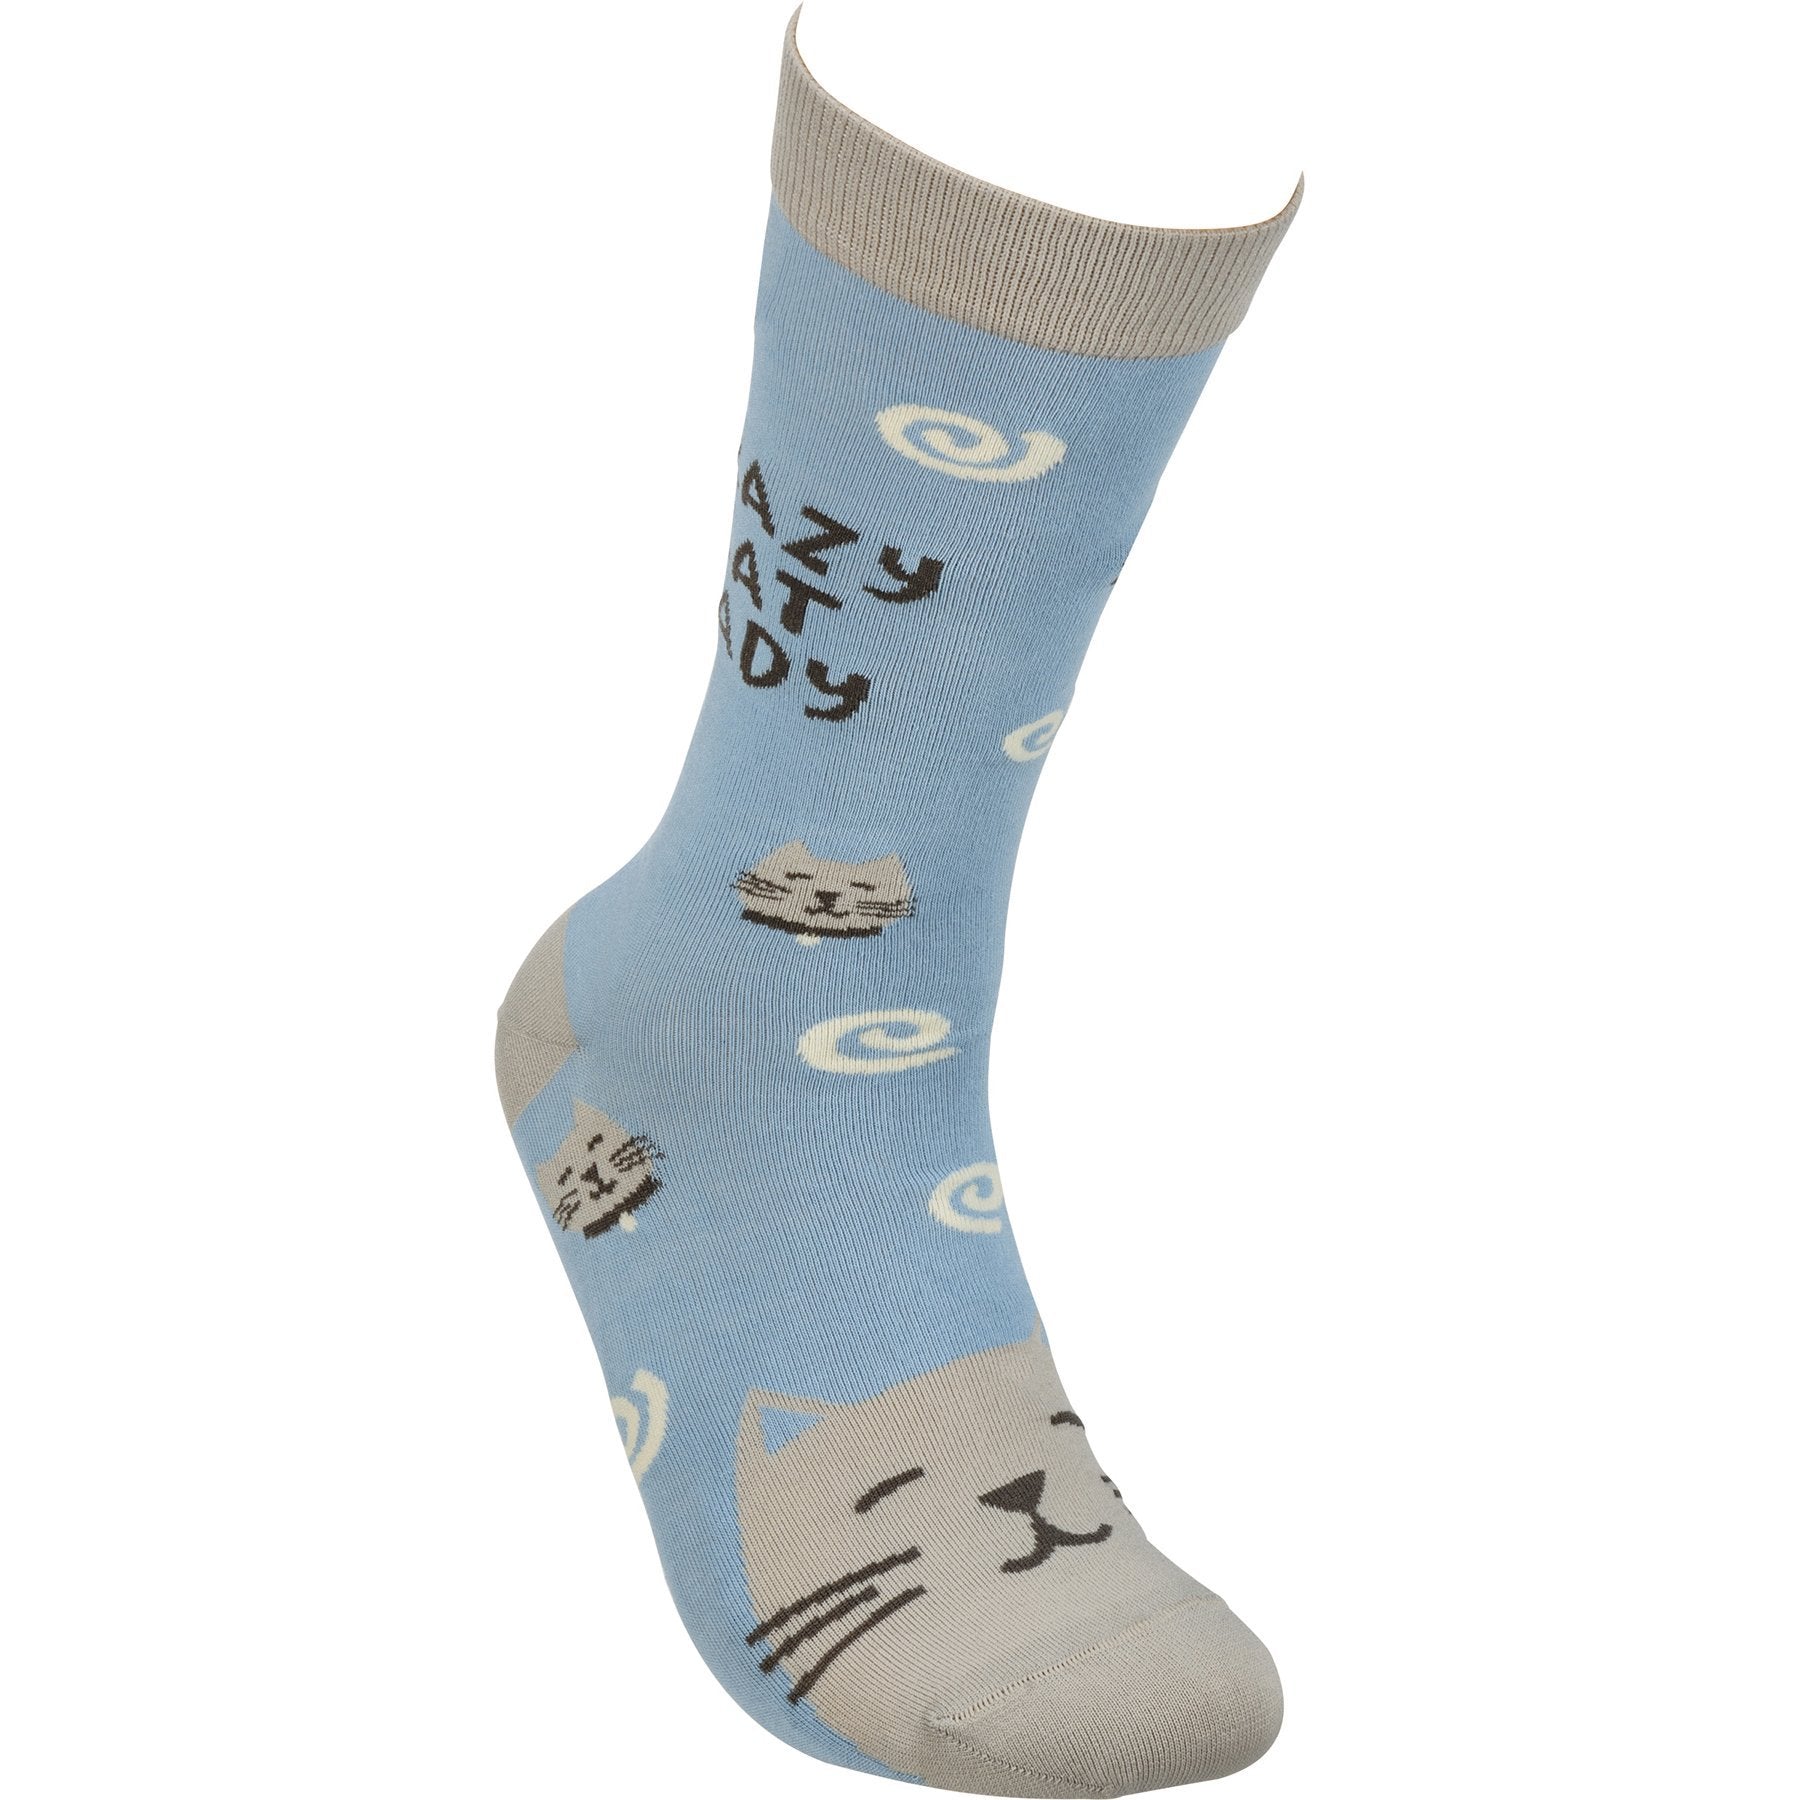 Womens Cat Socks, Crazy Cat Lady Socks